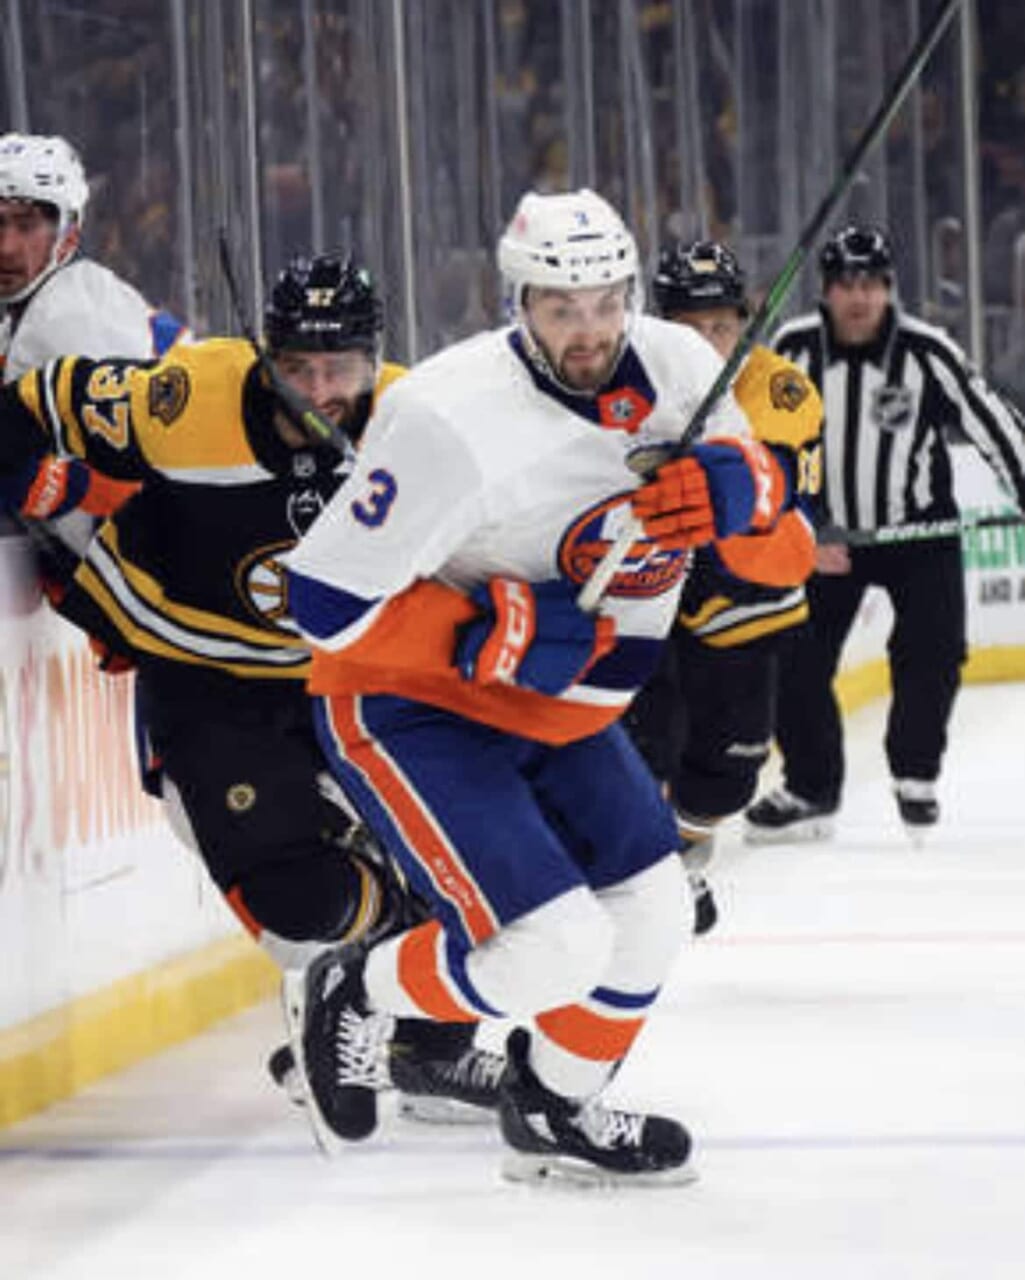 Islandersâ€™ Adam Pelech showing again why he deserves to be among NHLâ€™s elite